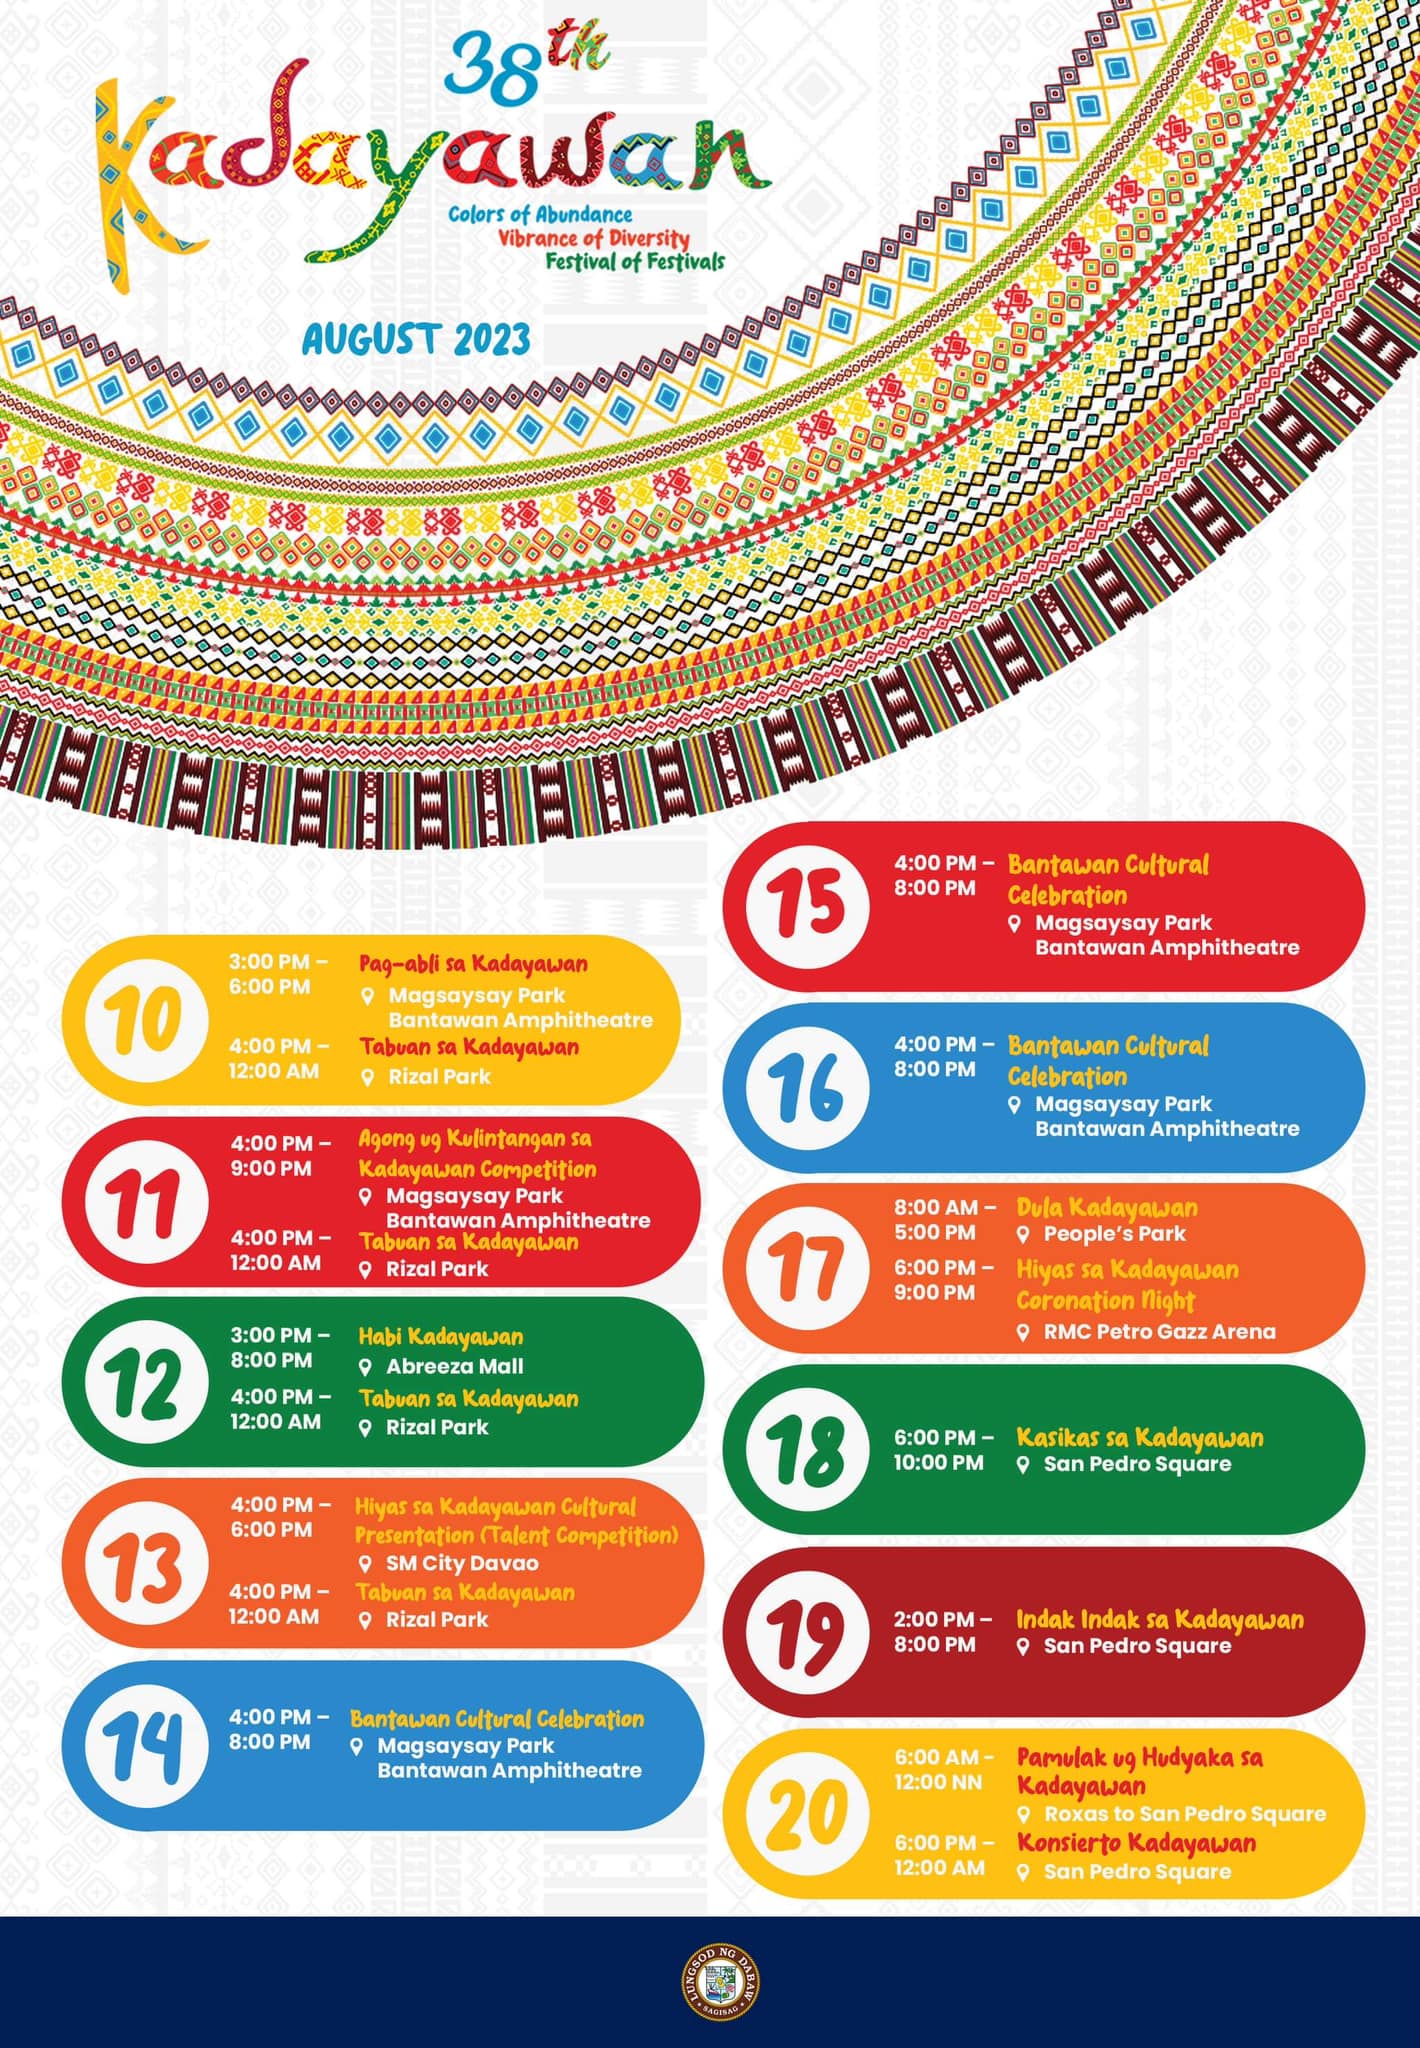 Kadayawan 2023 List of Activities and Schedules